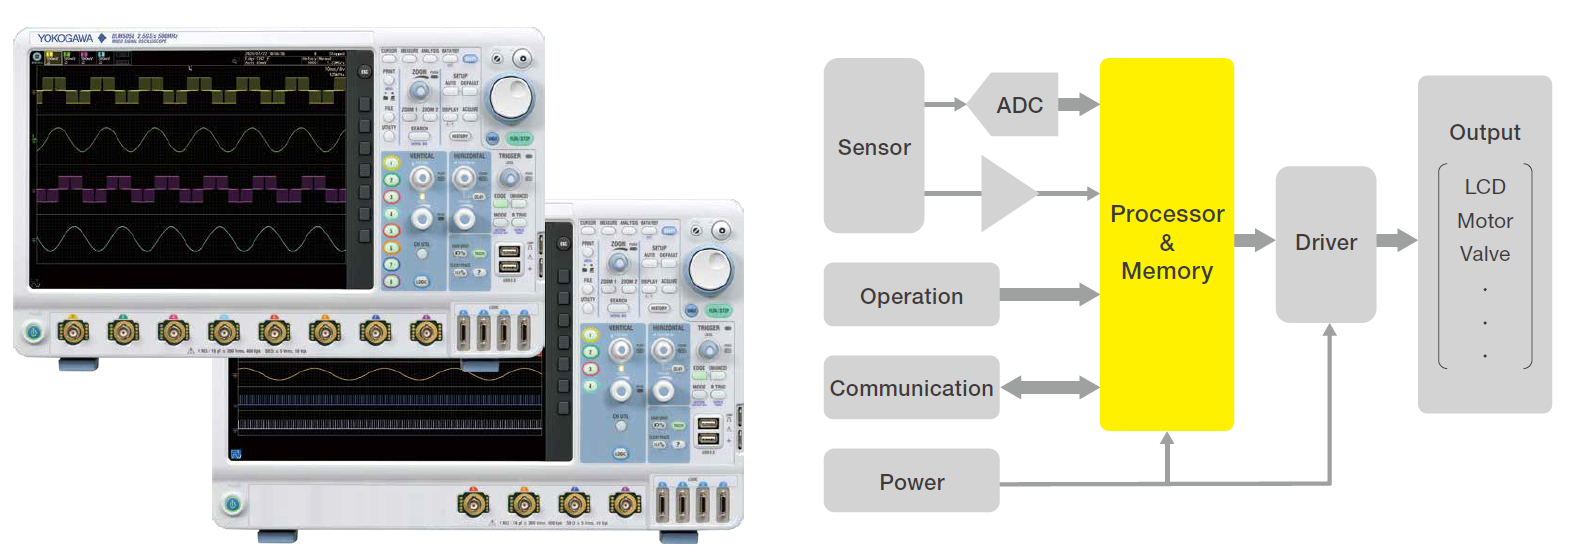 Yokogawa DLM5000 Mixed Signal Oscilloscope Features